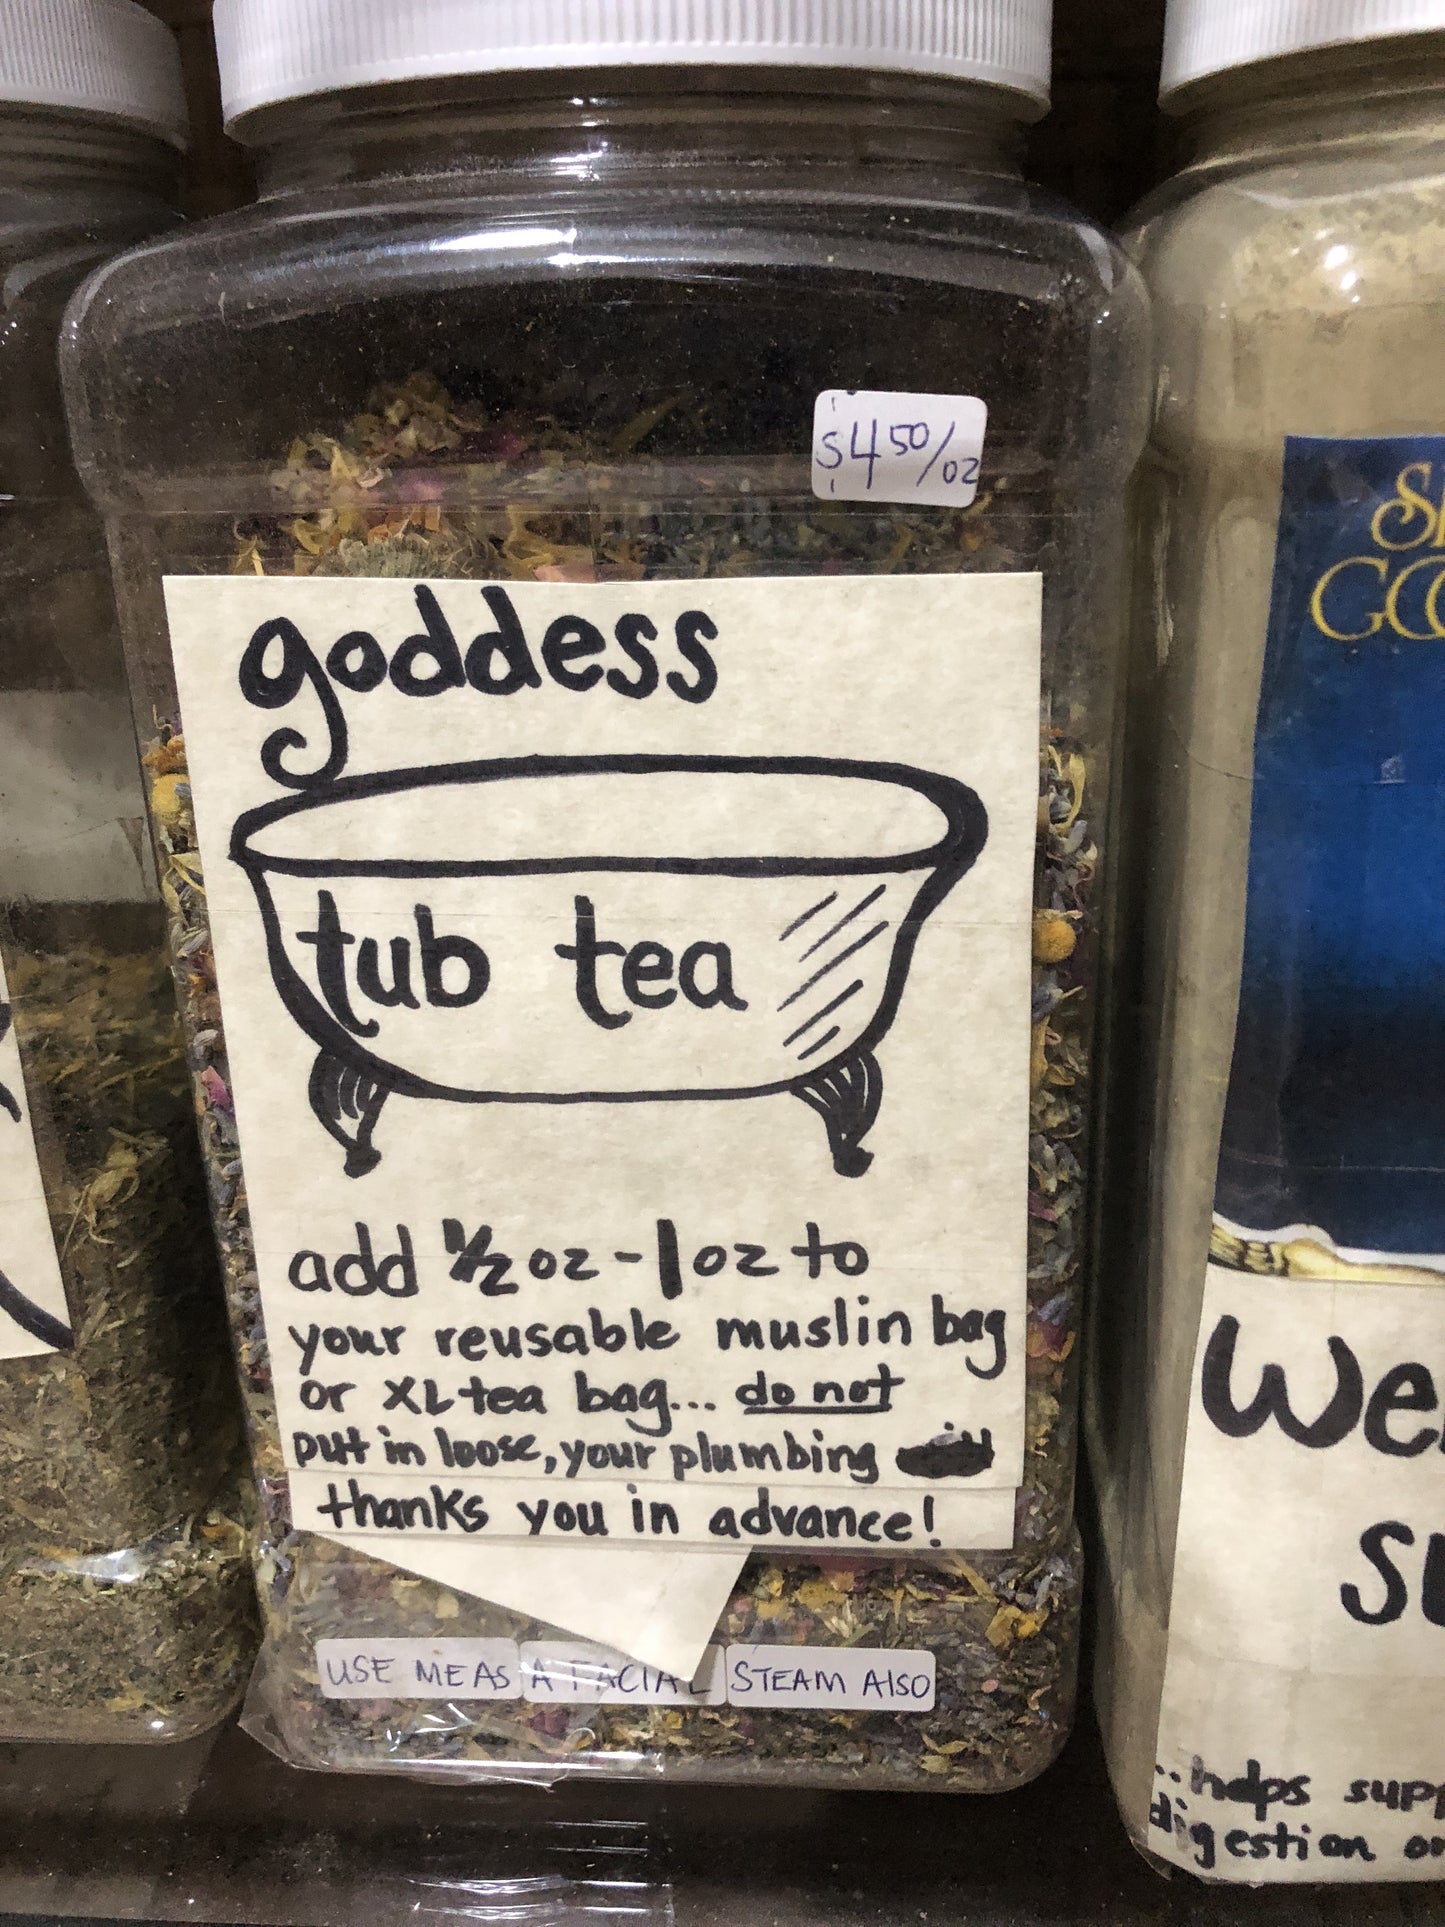 Goddess Tub Tea